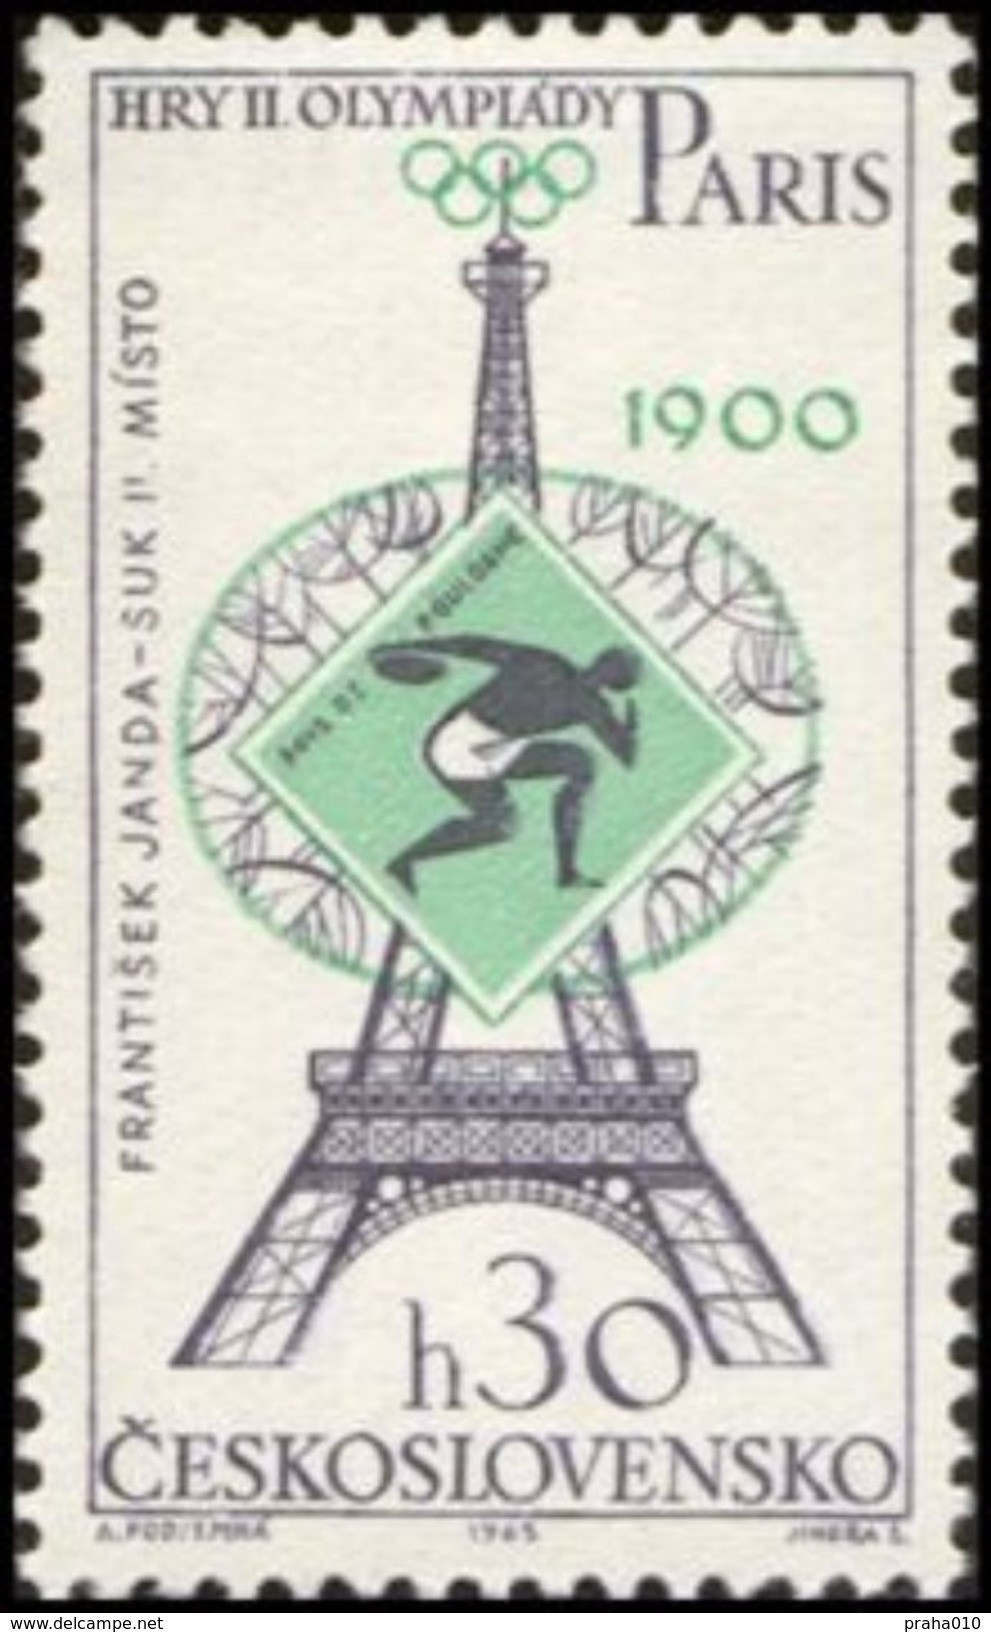 Czechoslovakia / Stamps (1965) 1429: Olympic Games 1900 Paris, F. Janda-Suk (discus Throw); Painter: Anna Podzemna - Summer 1900: Paris